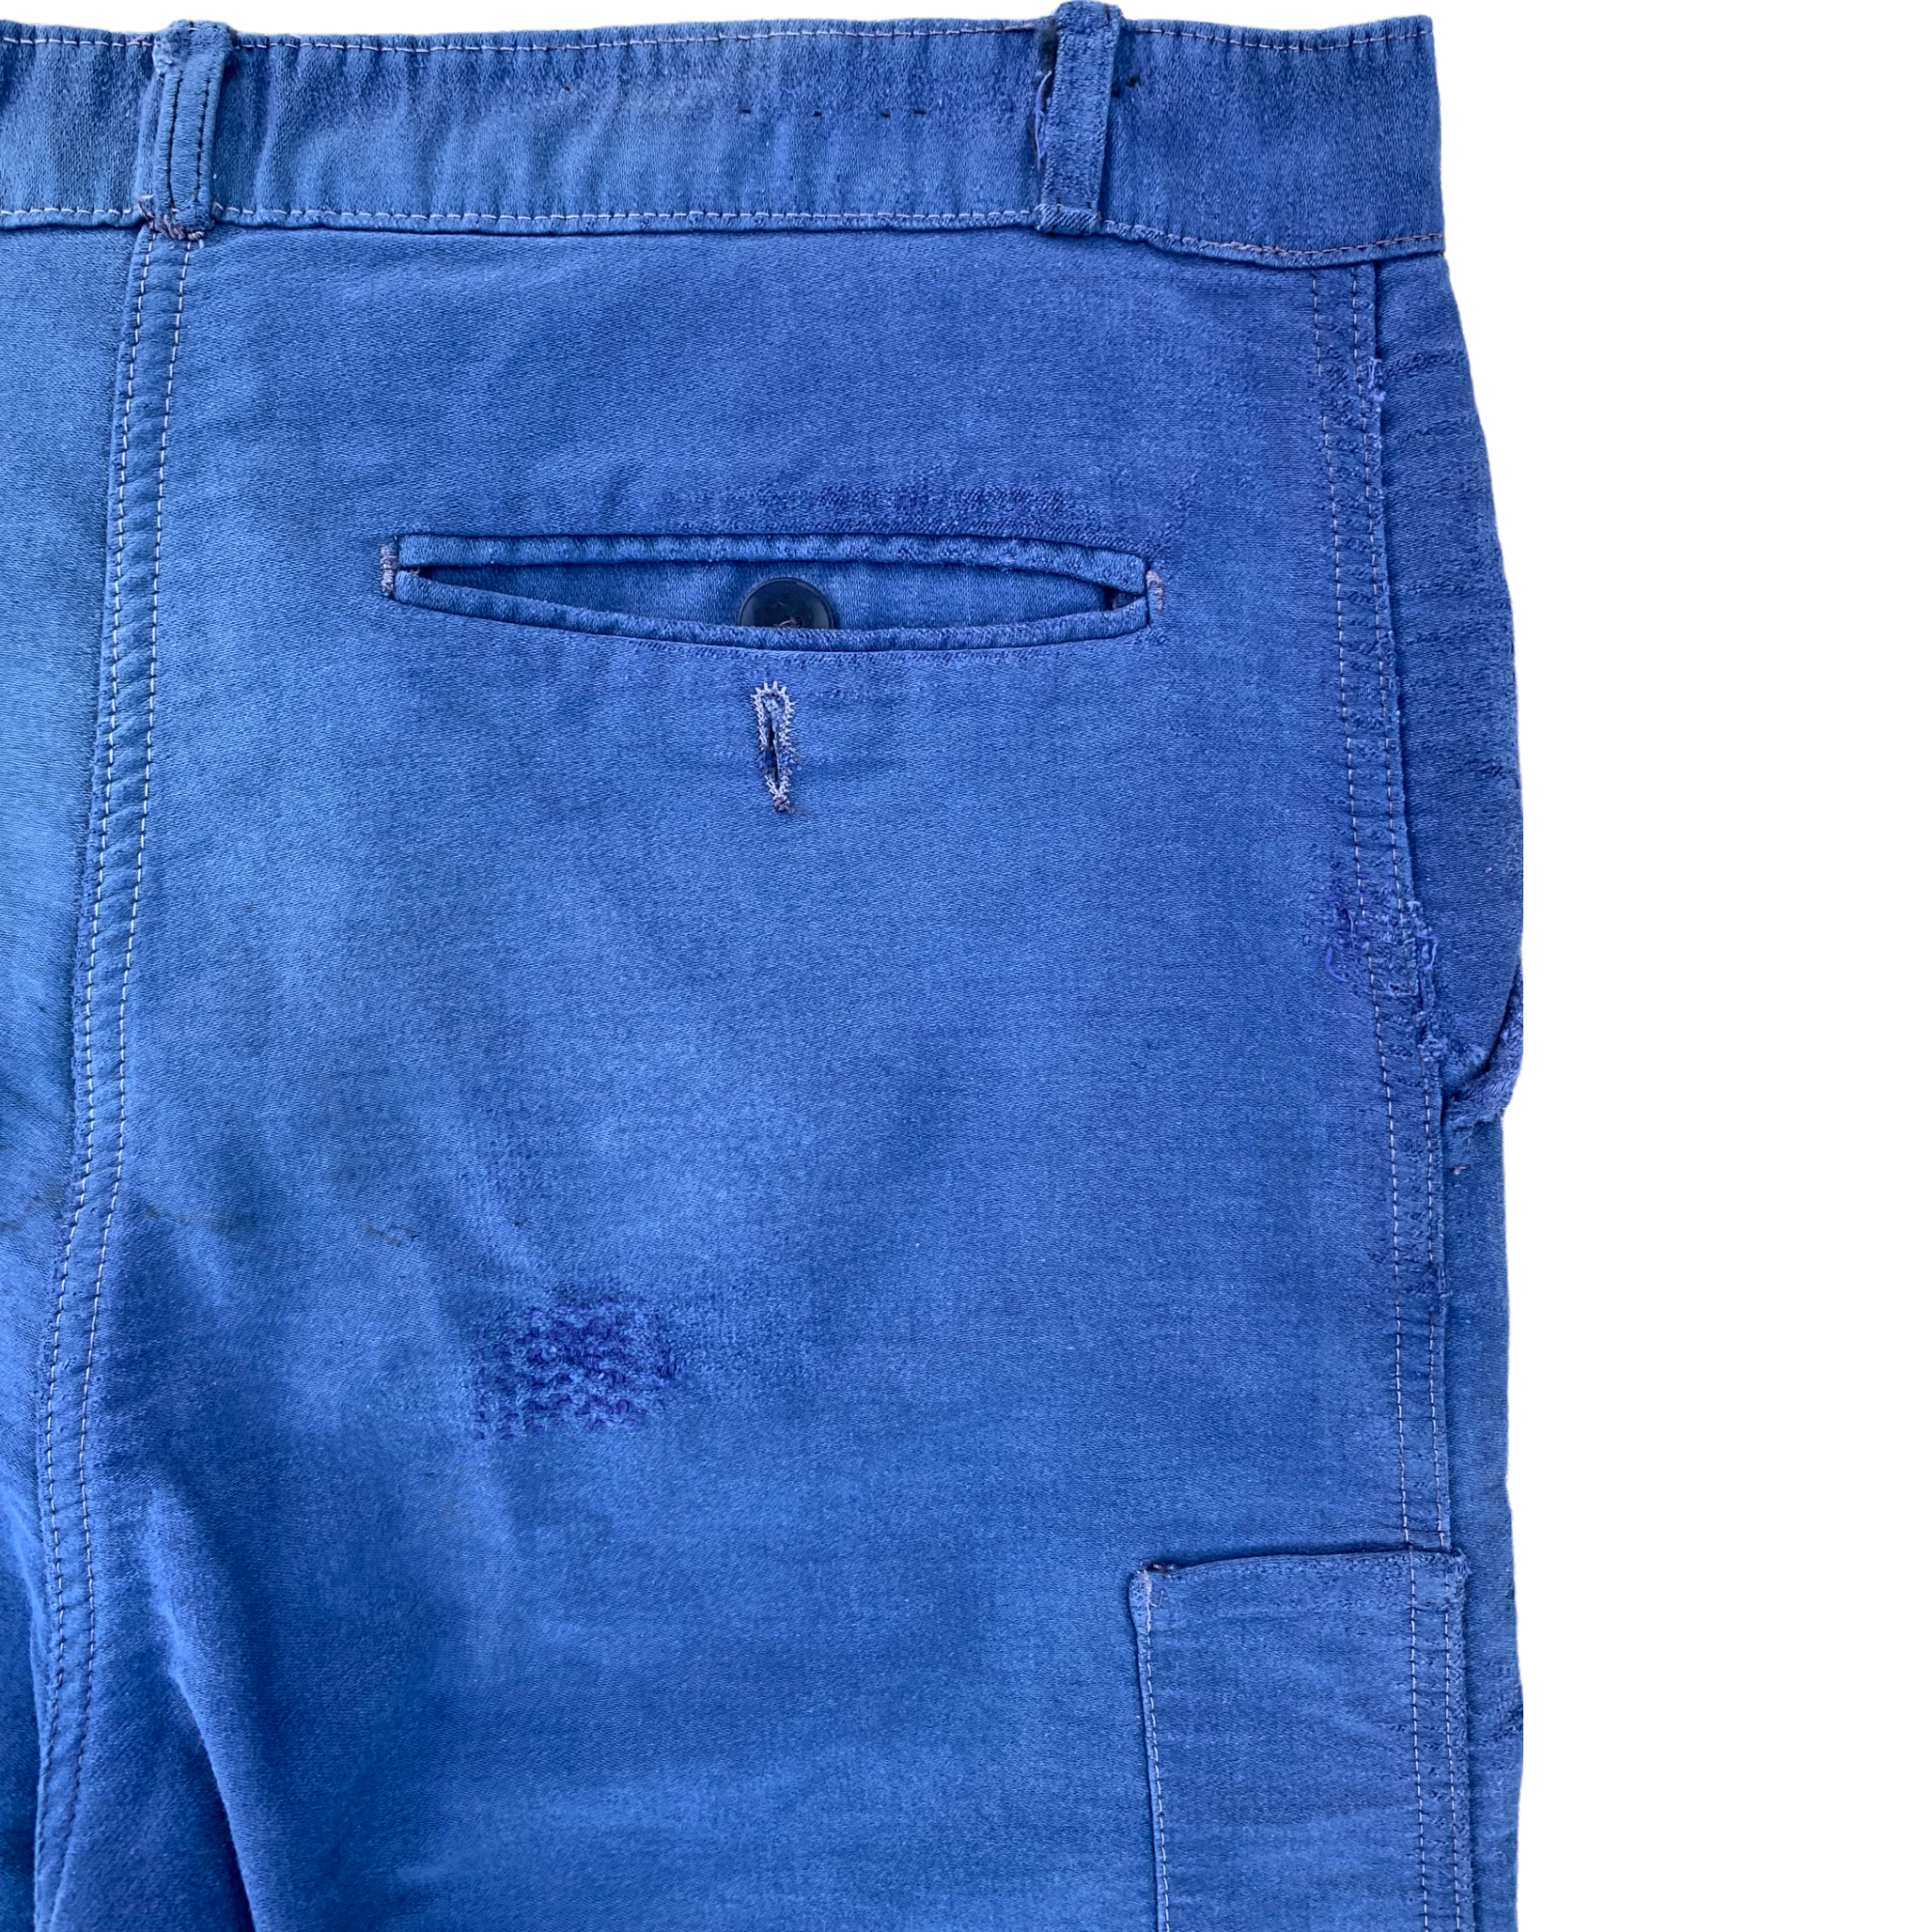 1940s French Moleskin Sashiko Repaired Work Trousers - Shades of Blue - 34x28